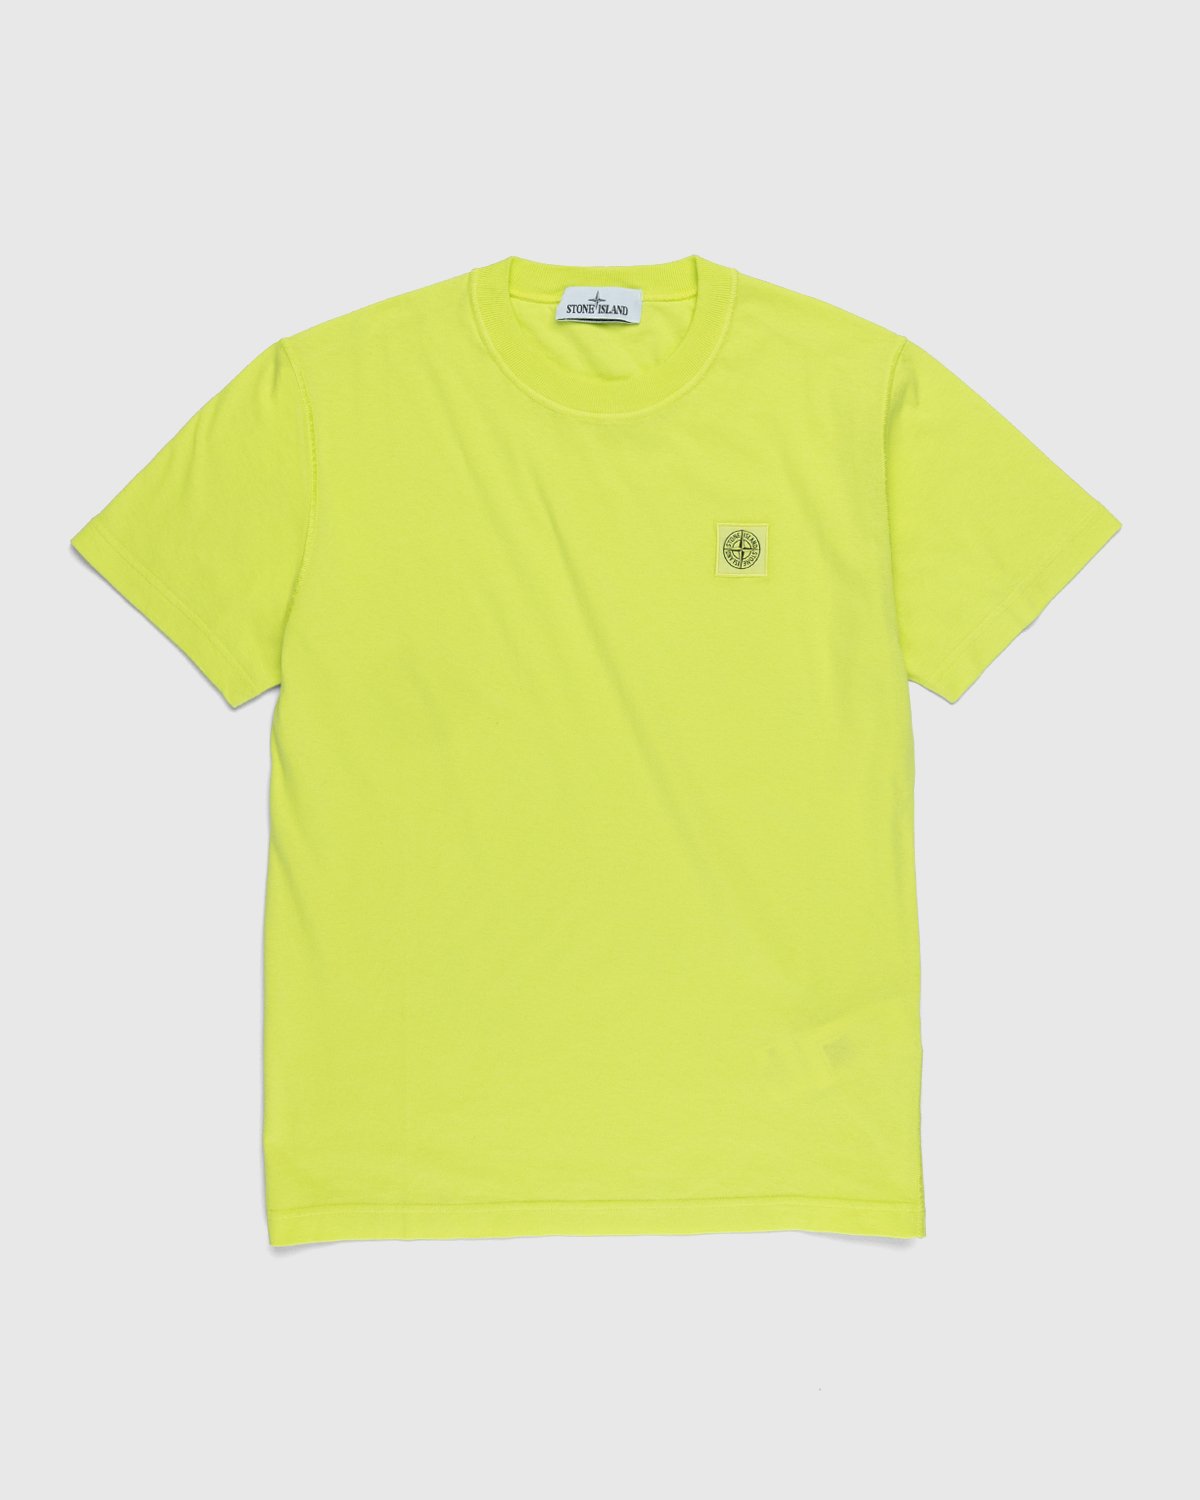 Stone Island - 23757 Garment-Dyed Fissato T-Shirt Lemon - Clothing - Yellow - Image 1